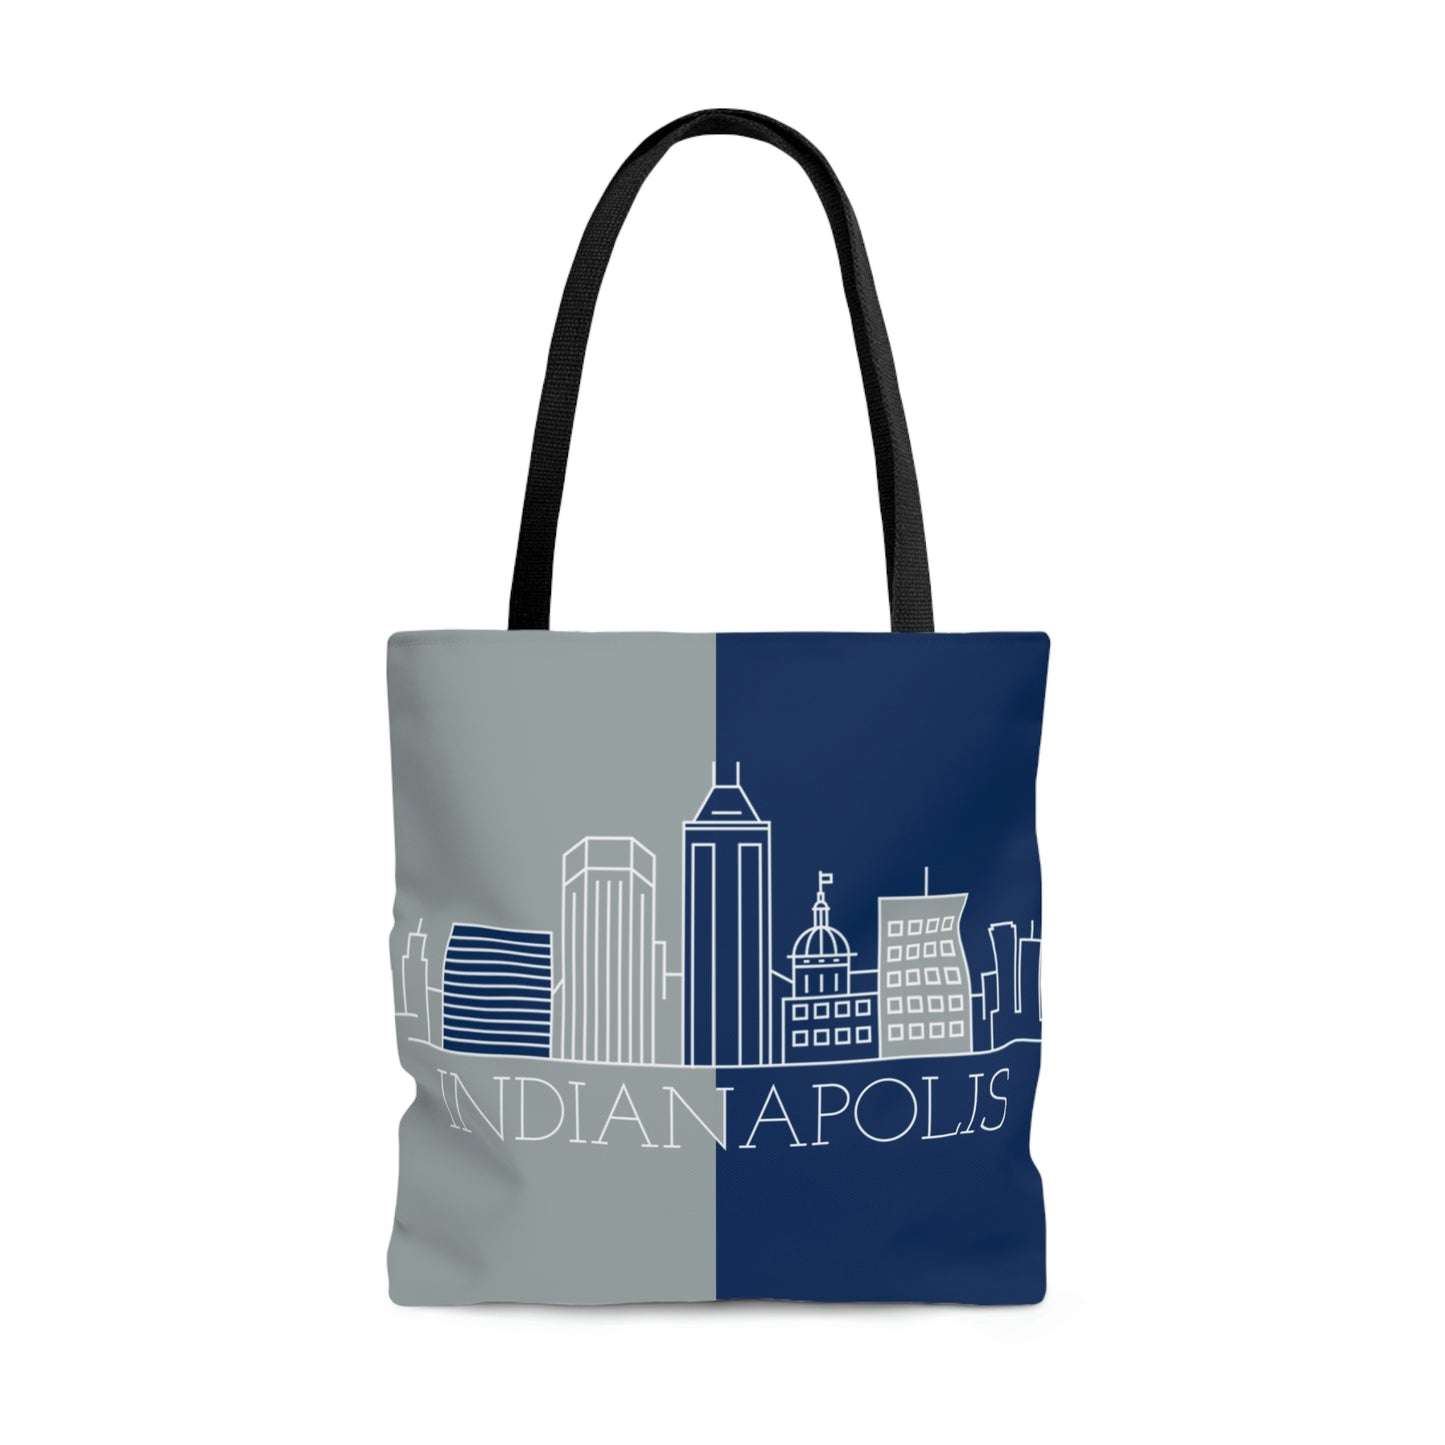 Indianapolis - City series  - Tote Bag